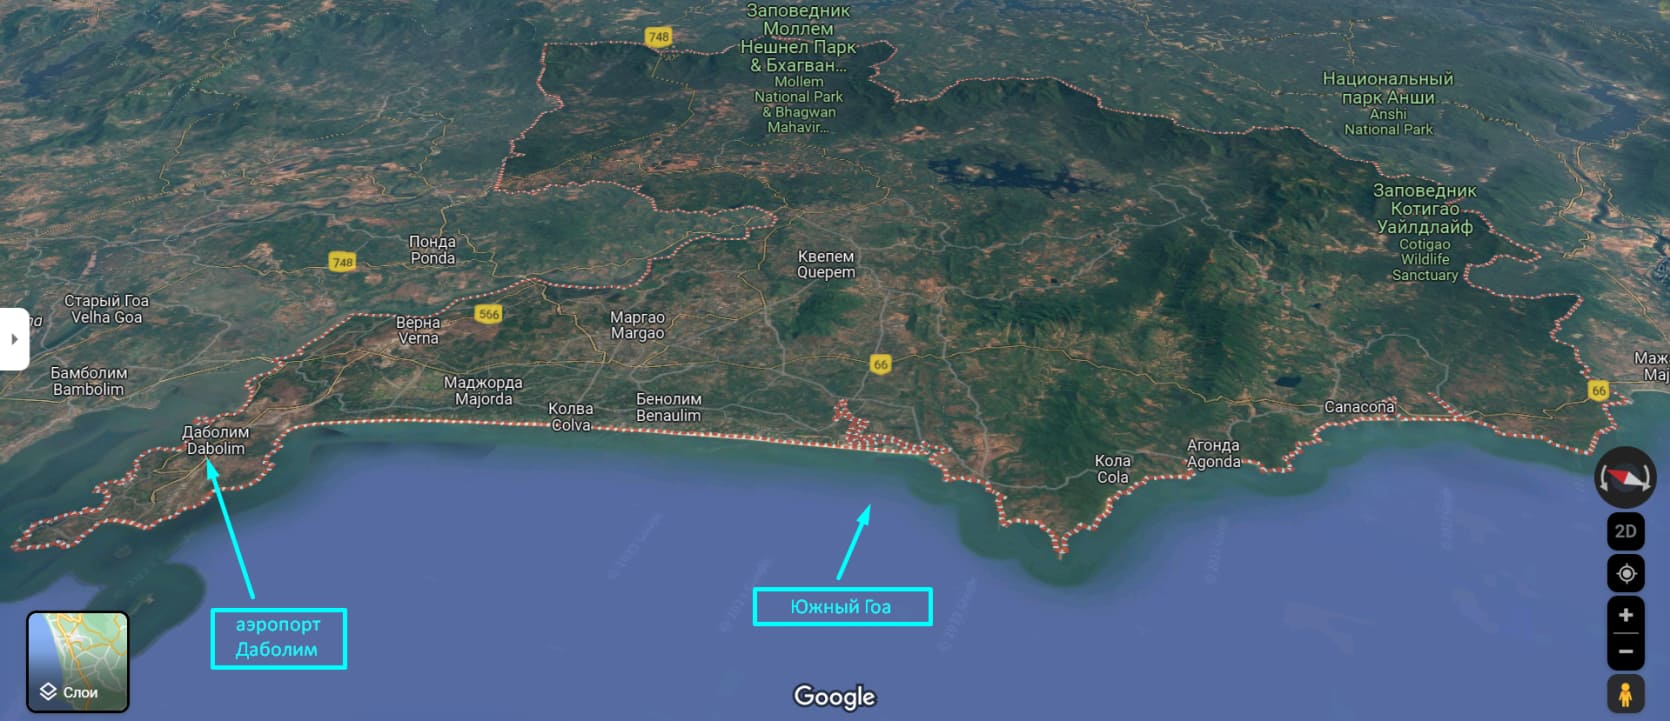 Аэропорт Даболим на карте Гоа